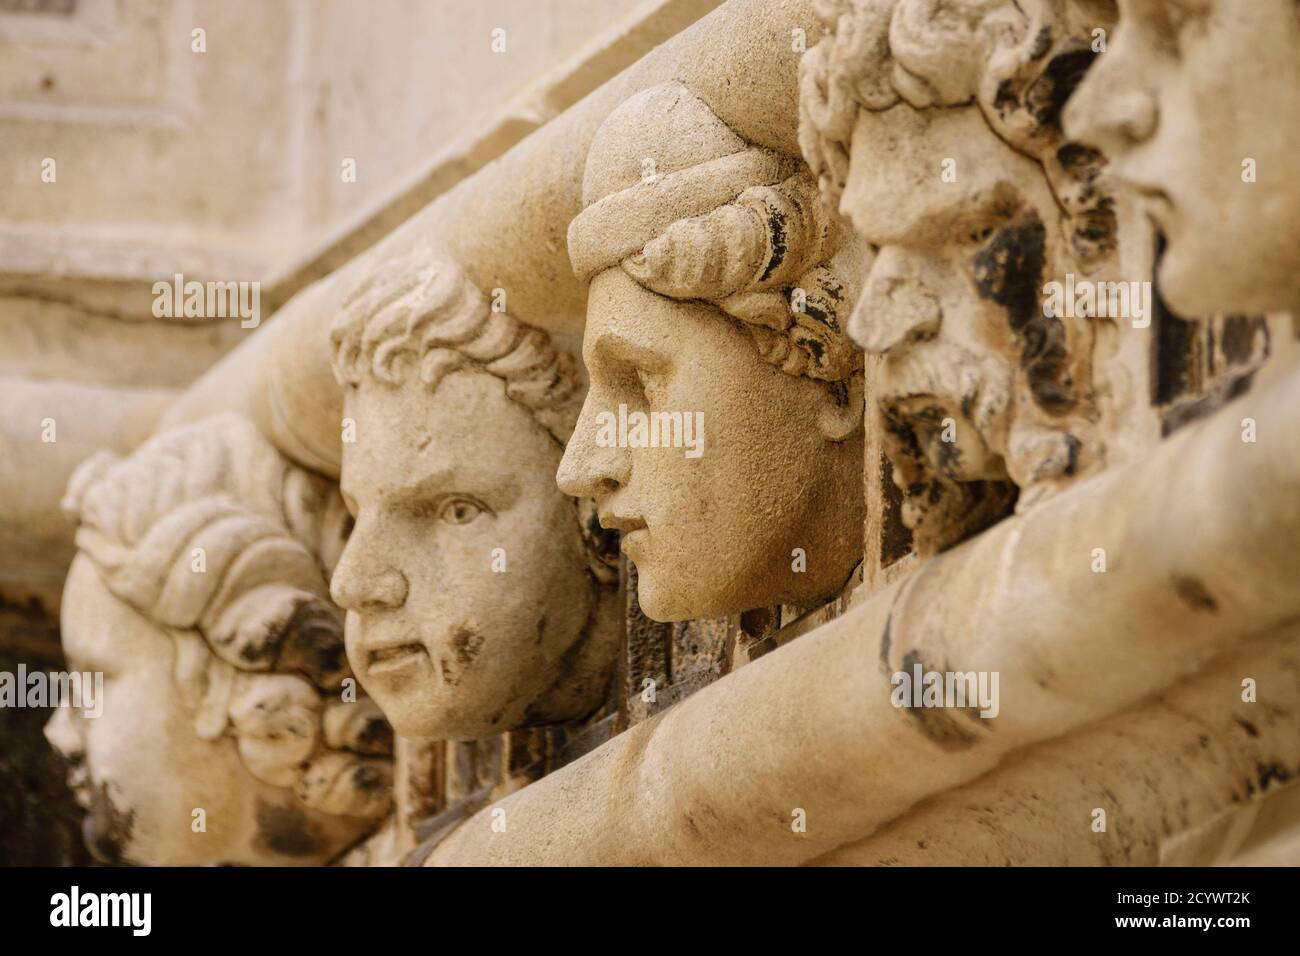 friso de rostros obra de Juraj Dalmatinac, catedral de Santiago, Patrimonio Mundial de la UNESCO,Sibenik, costa dalmata, Croacia, europa Stock Photo